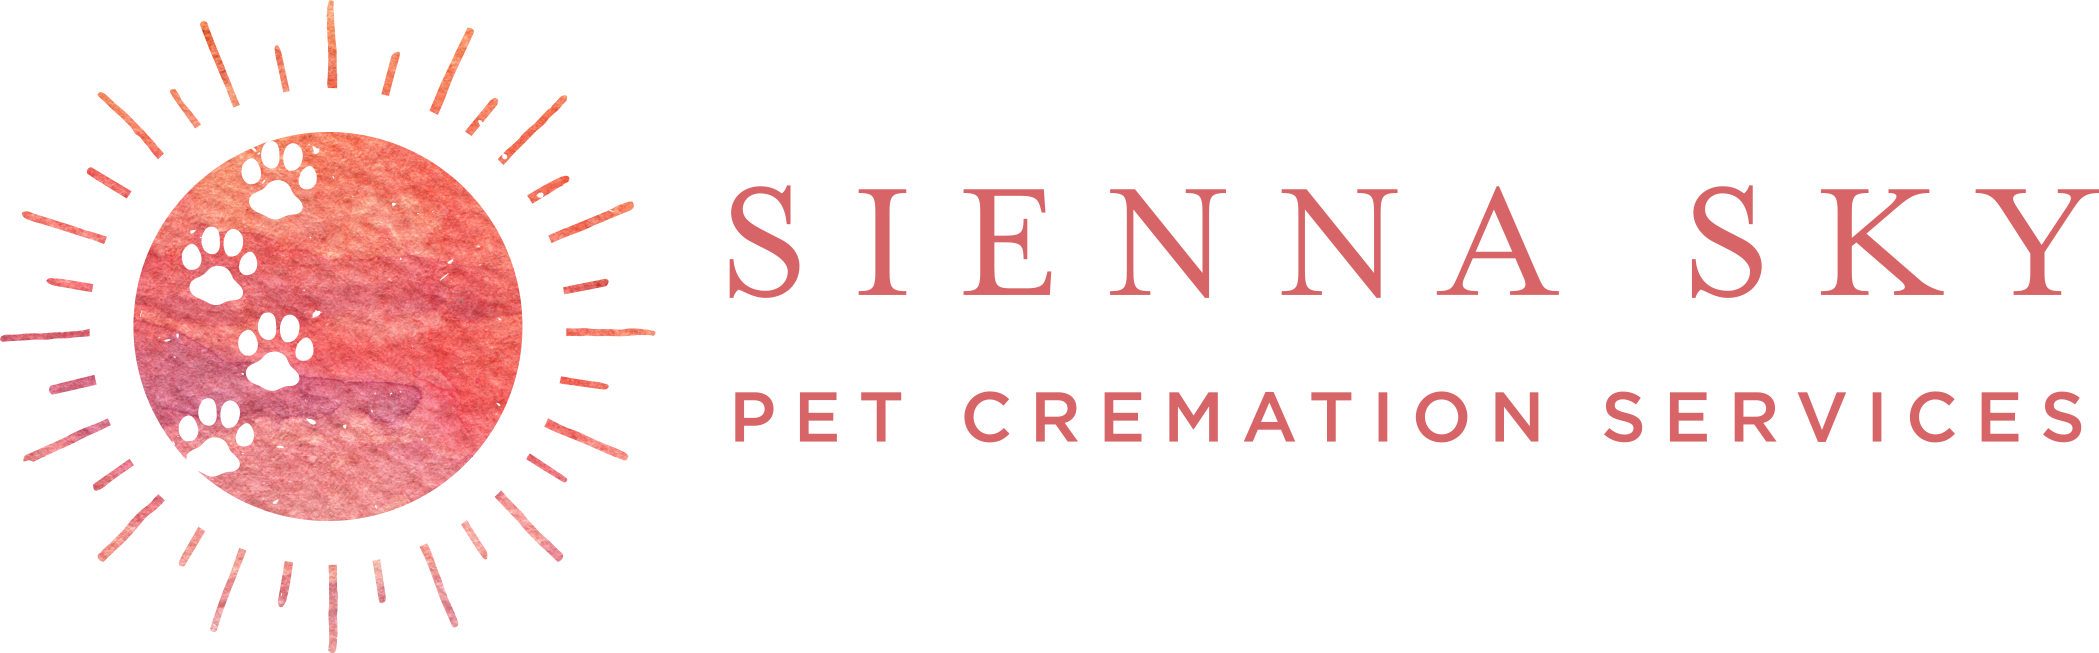 Sienna Sky Pet Cremation